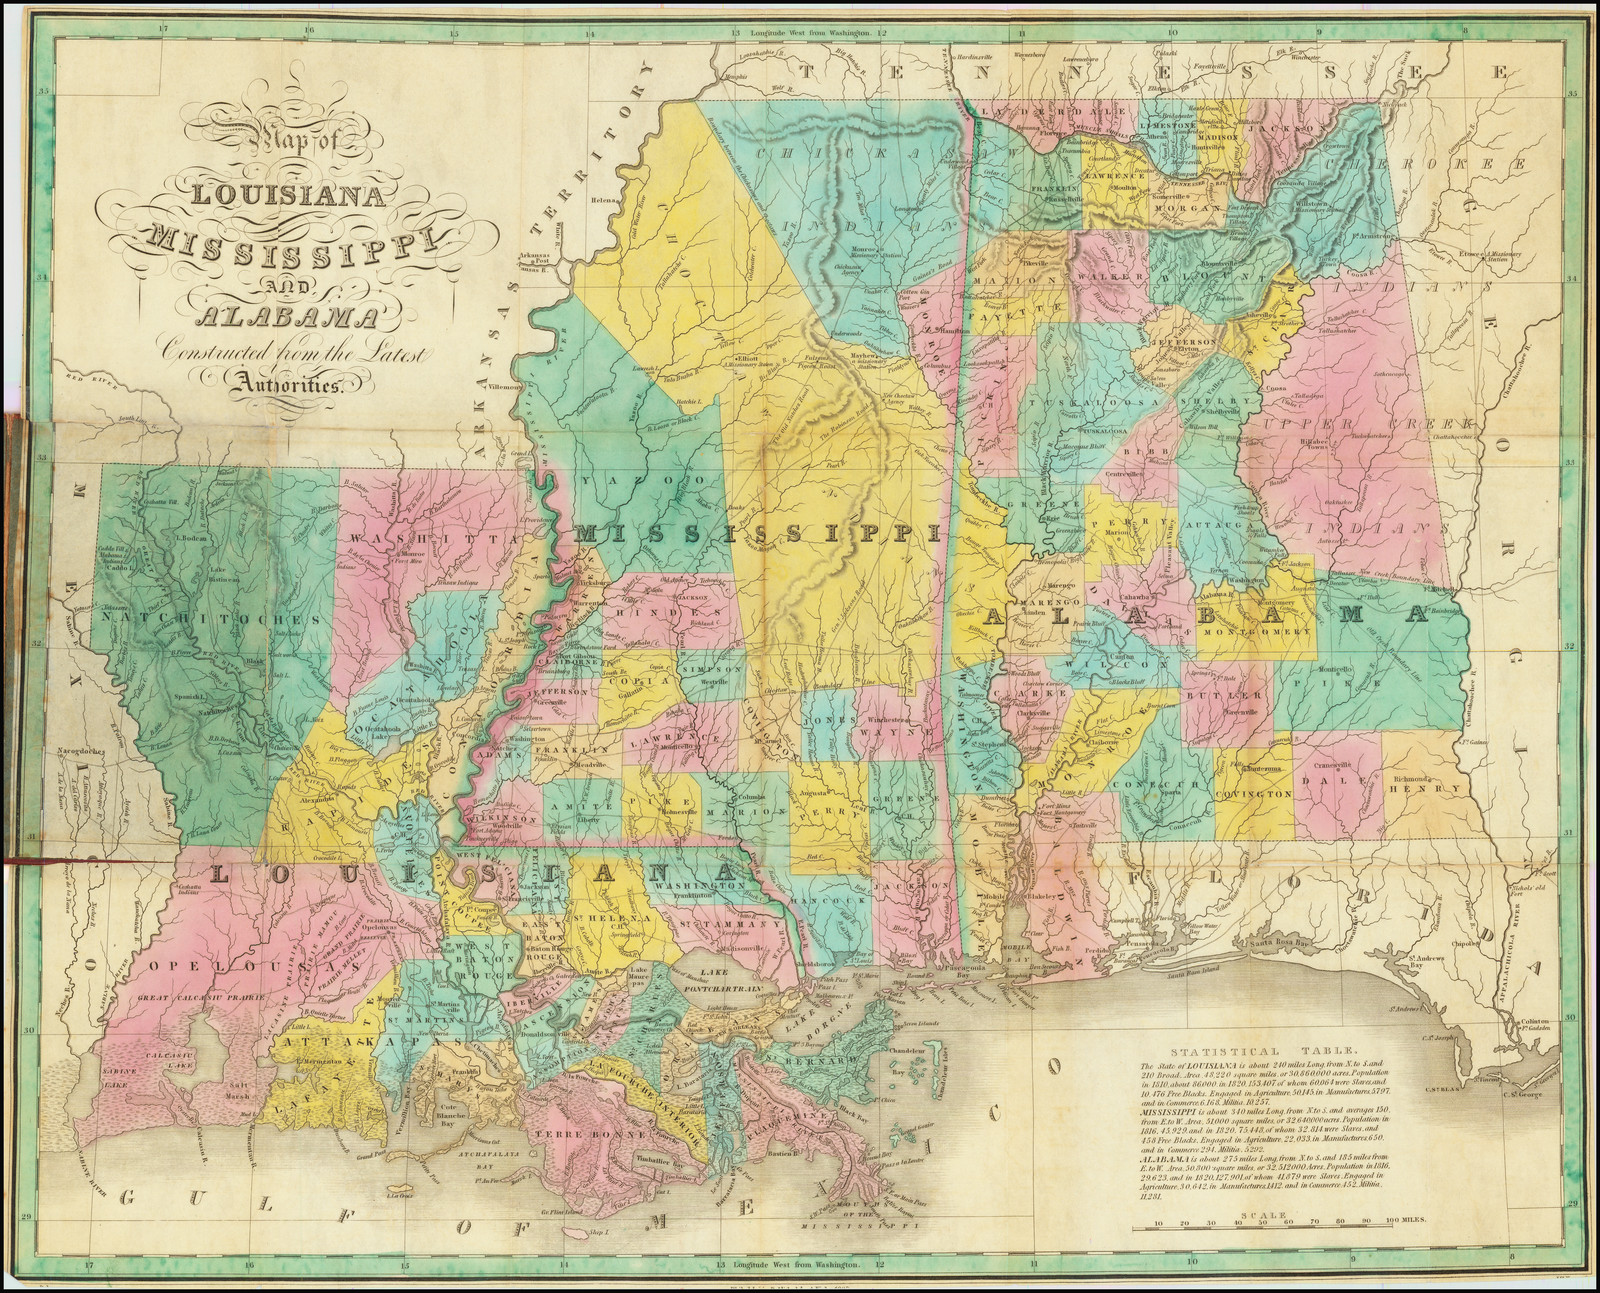  1860 MapWorld Atlas County Of Louisiana, Mississippi